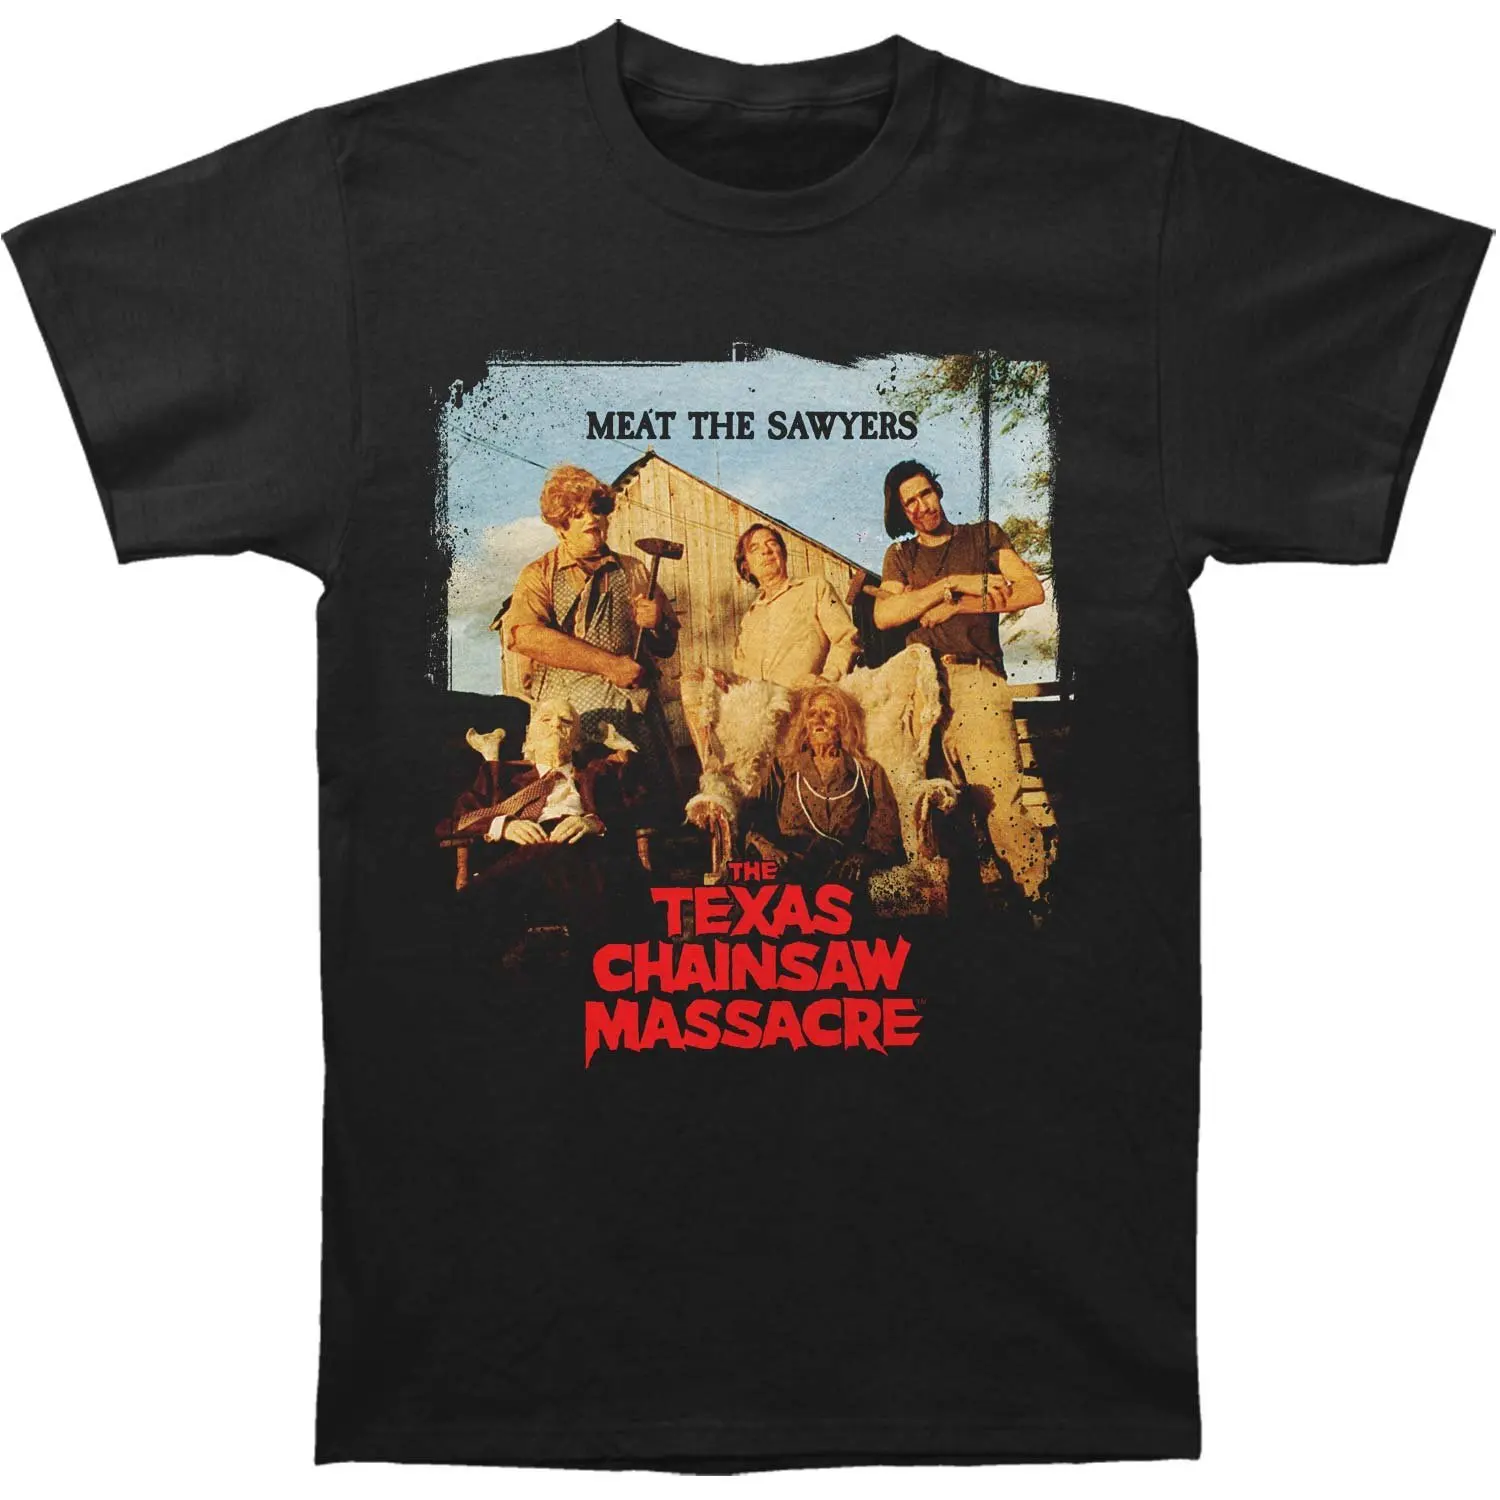 Футболка для взрослых с надписью Texas Chainsaw Massacre Meat The Sawyers, Мужская футболка с коротким рукавом, повседневные с принтом, футболка для мужчин